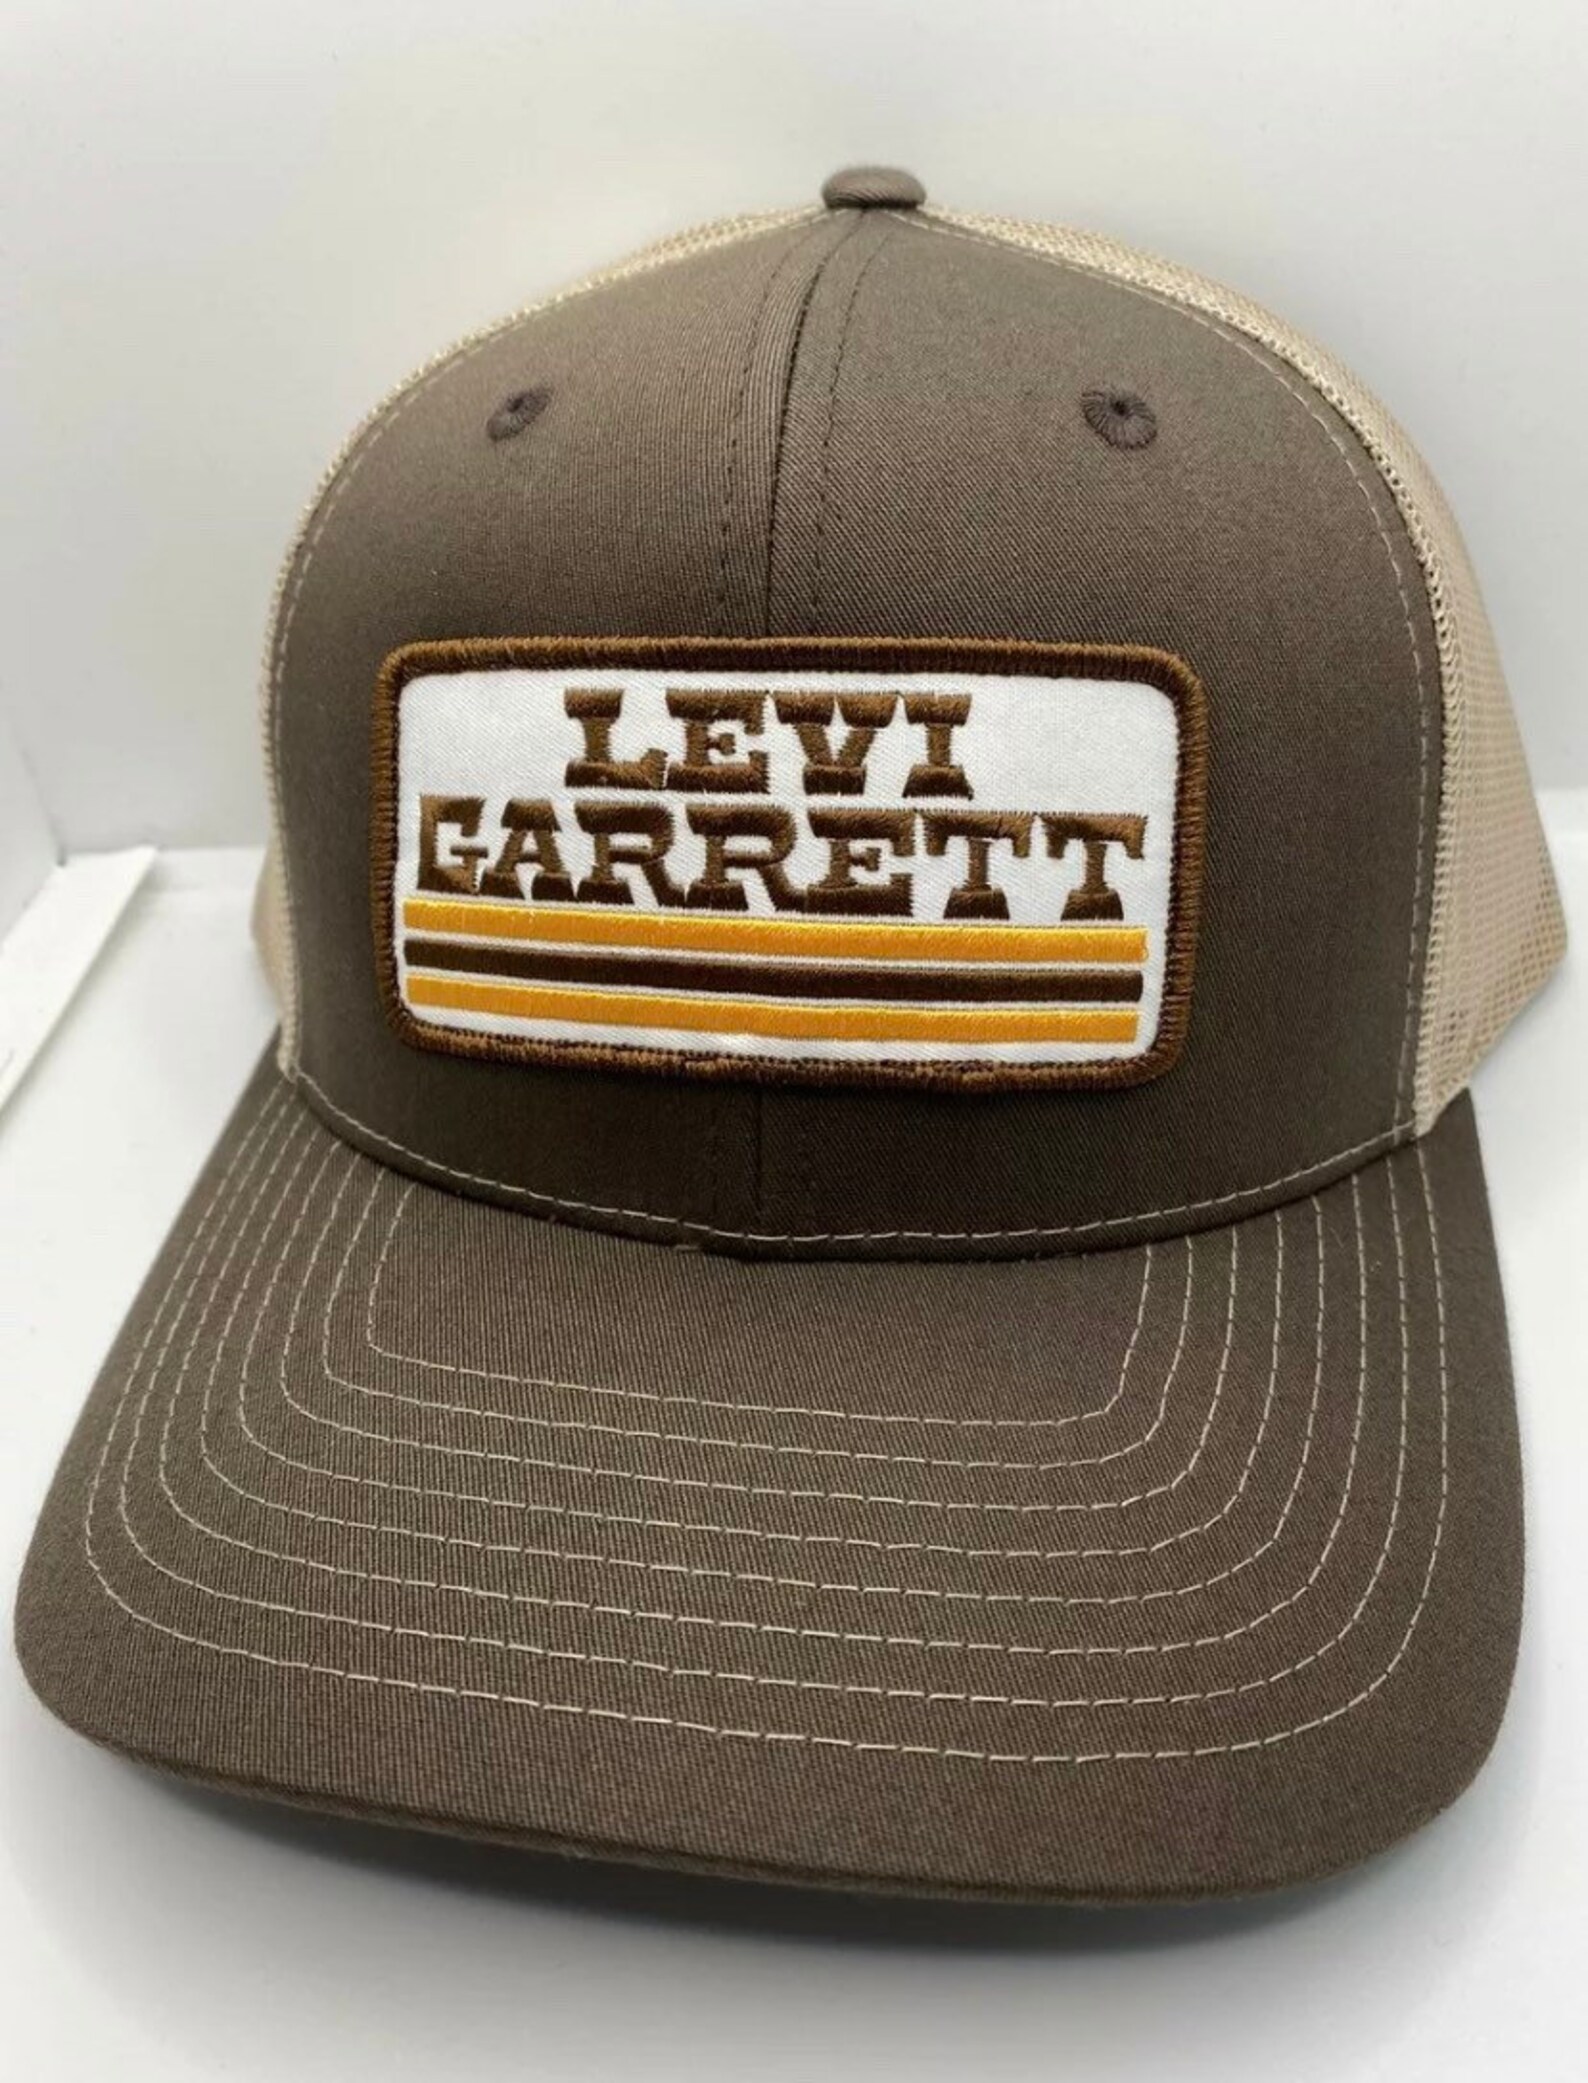 Levi Garrett Chewing Tobacco Racing Trucker Hat Richardson 112 | Etsy